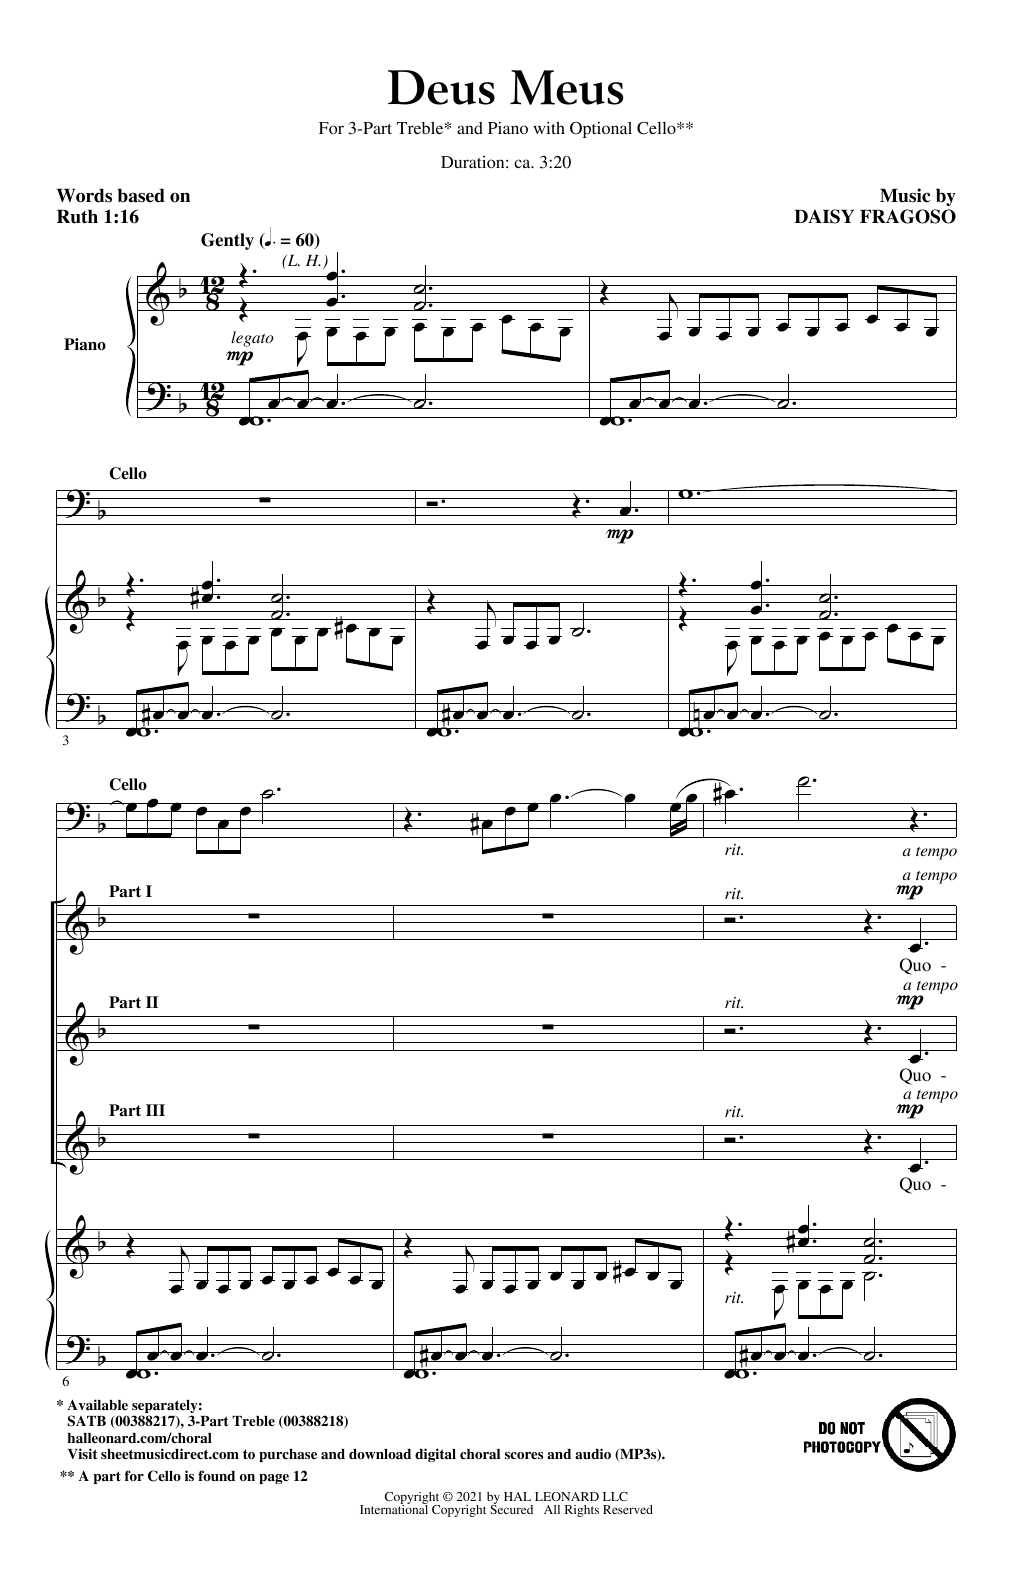 Daisy Fragoso Deus Meus sheet music notes and chords arranged for SATB Choir